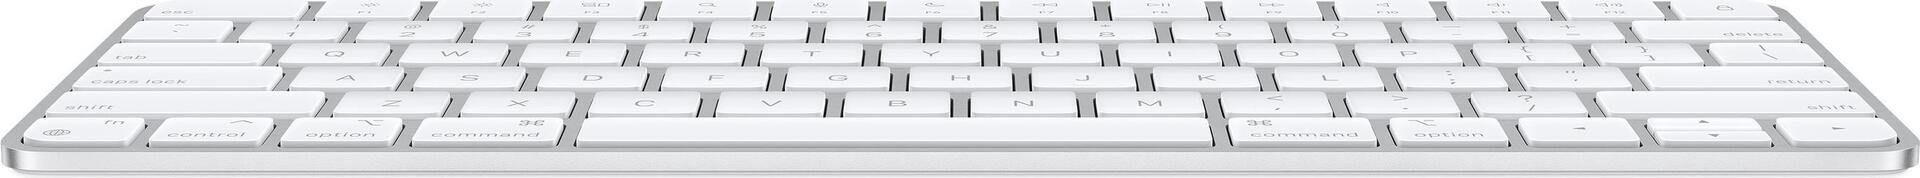 Apple Magic Keyboard (MK2A3PO/A)